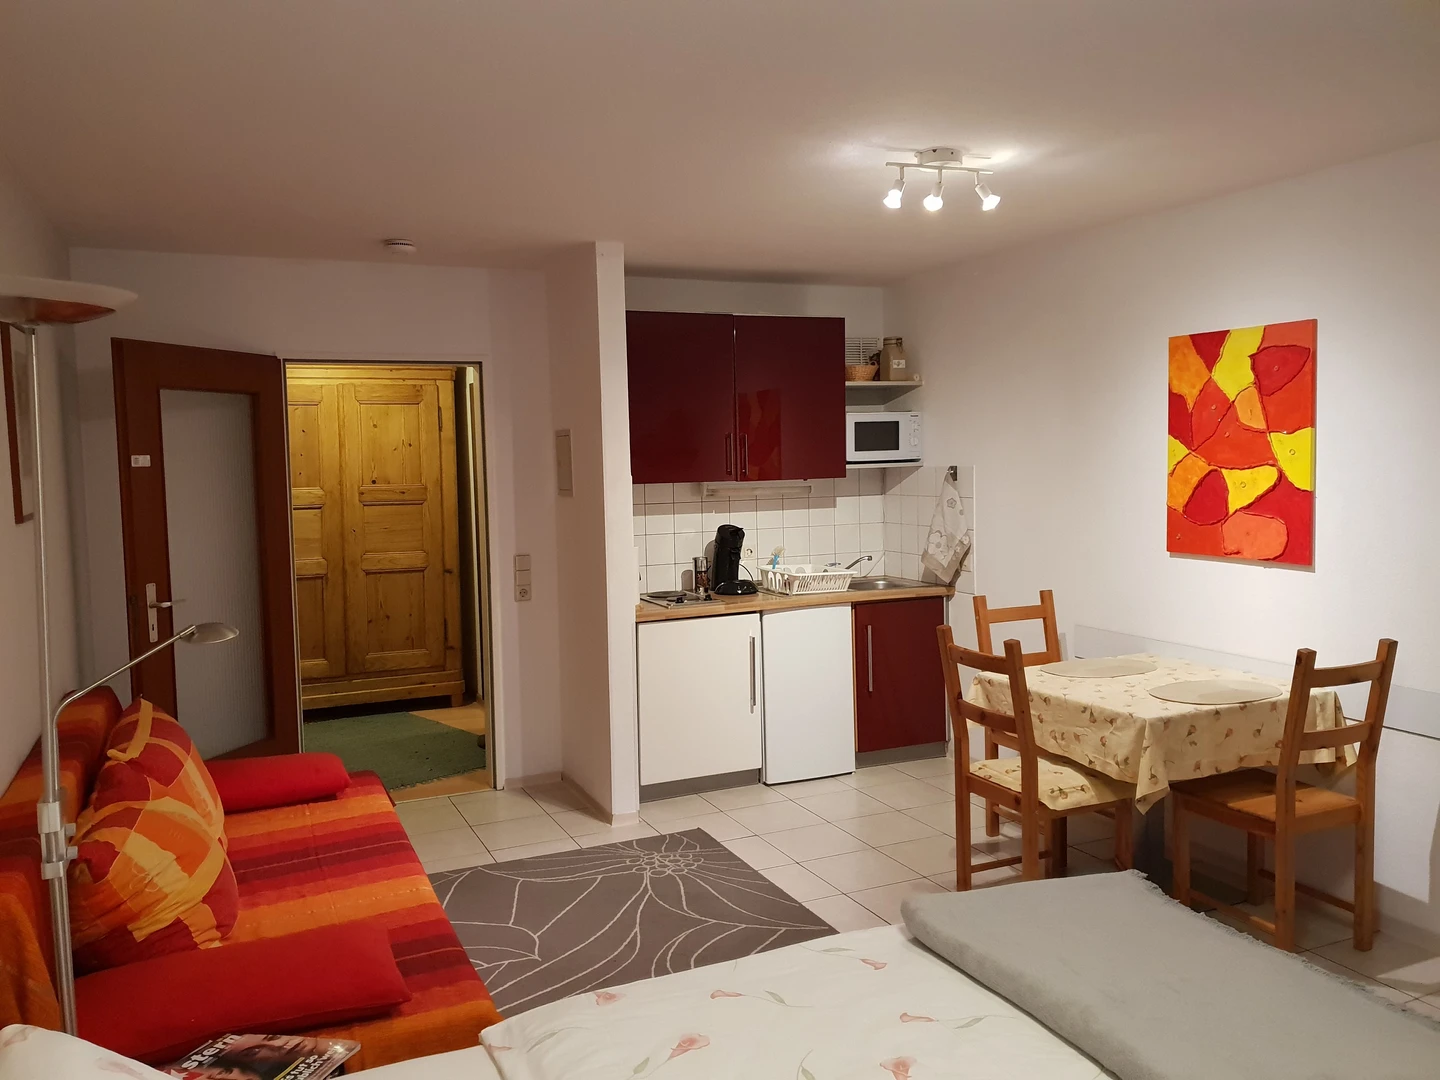 Room for rent in a shared flat in Freiburg Im Breisgau